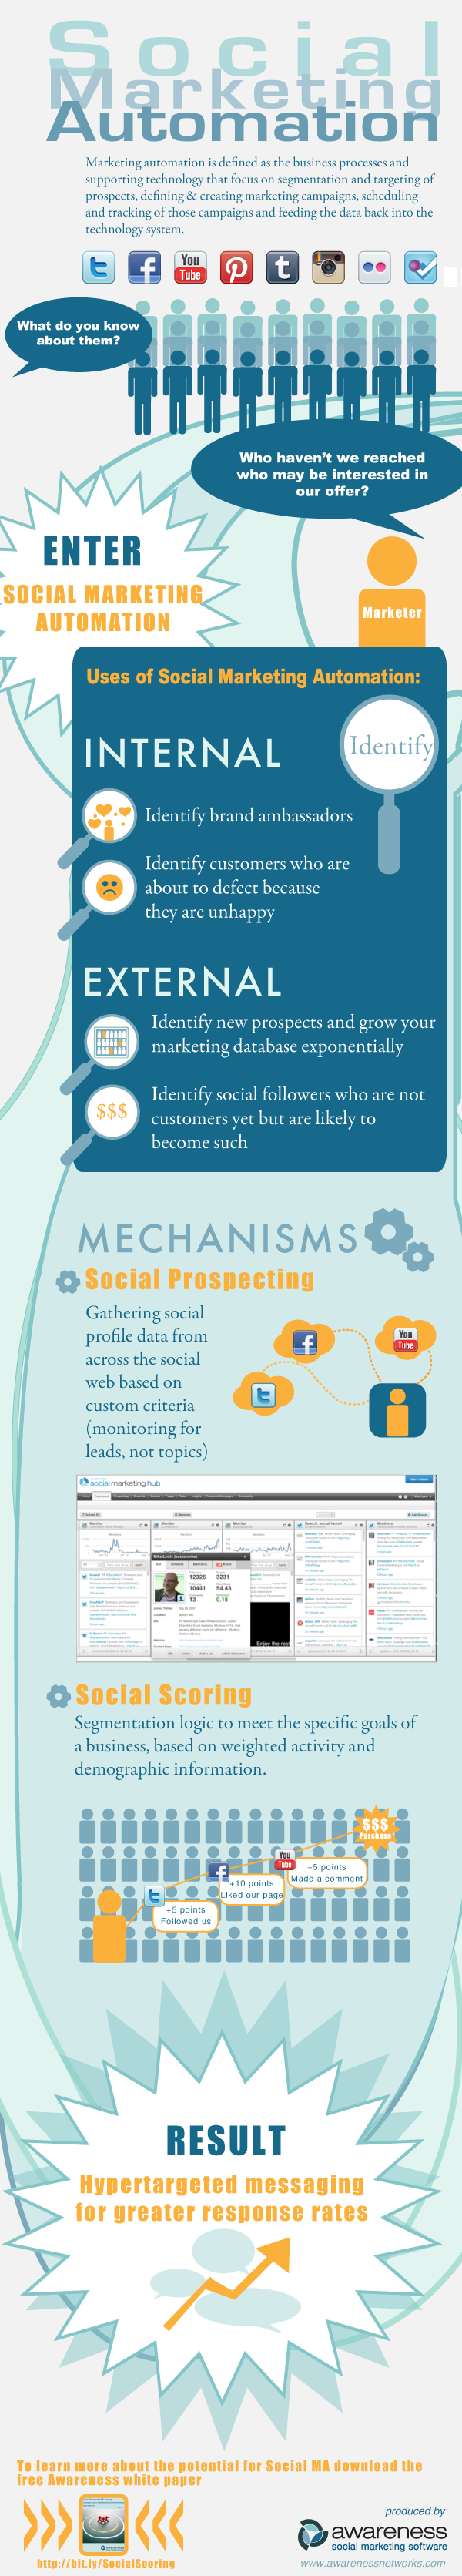 Social Marketing Automation Infographic Awareness Inc